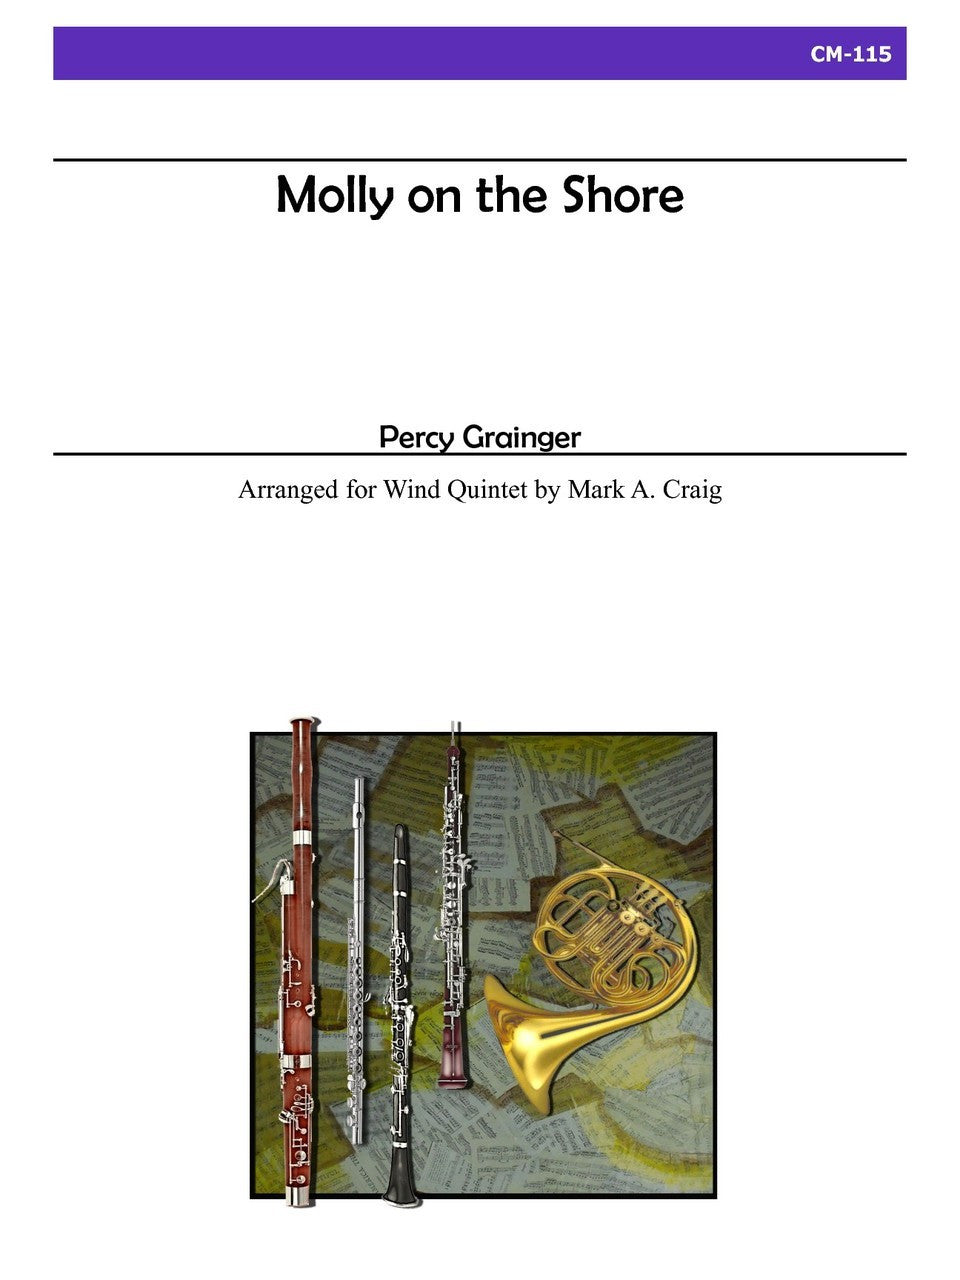 Grainger (arr. Mark A. Craig) - Molly on the Shore